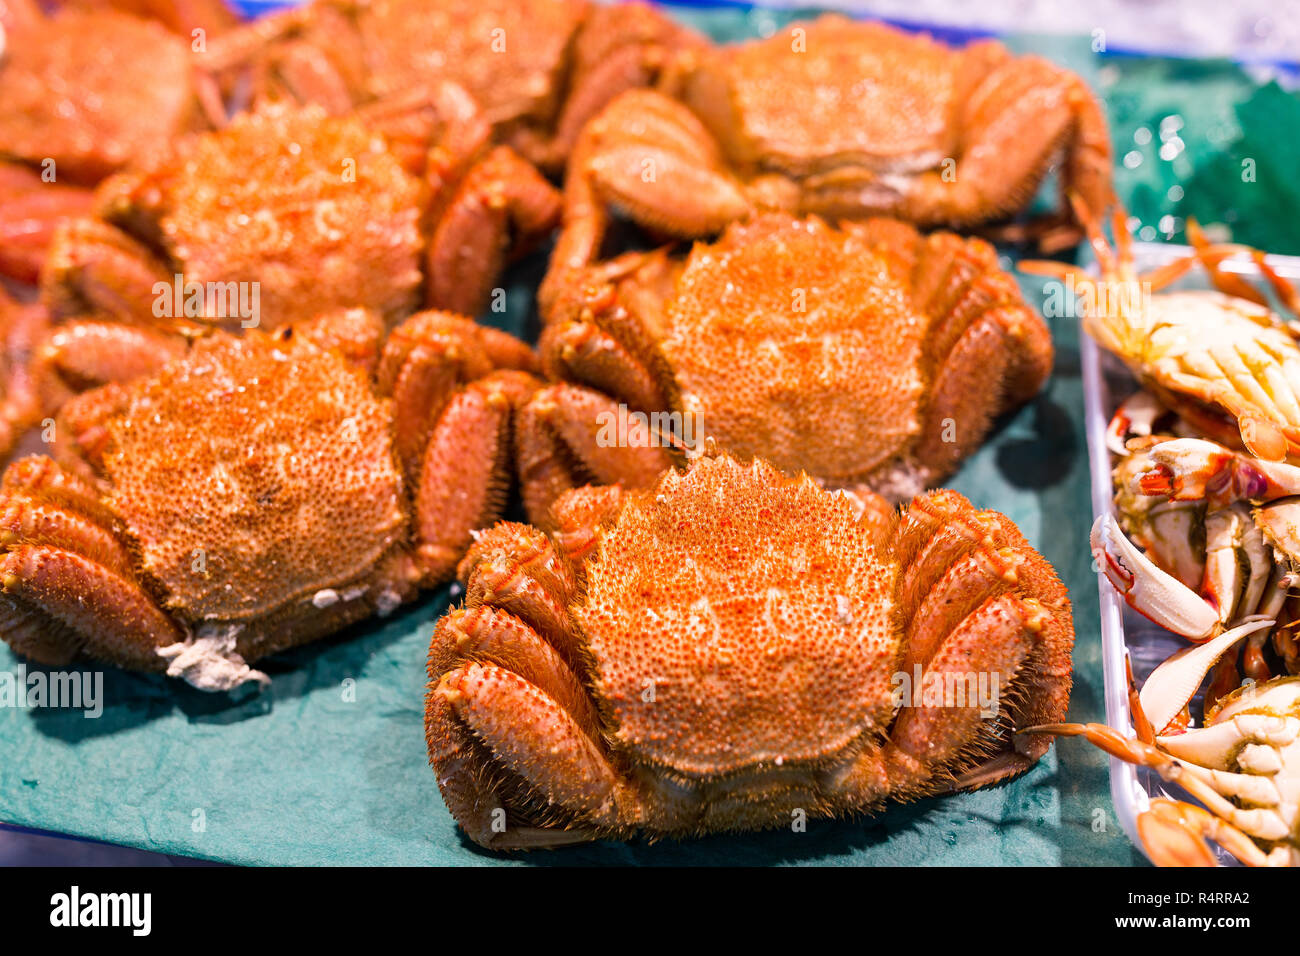 Crab in market Stock Photo